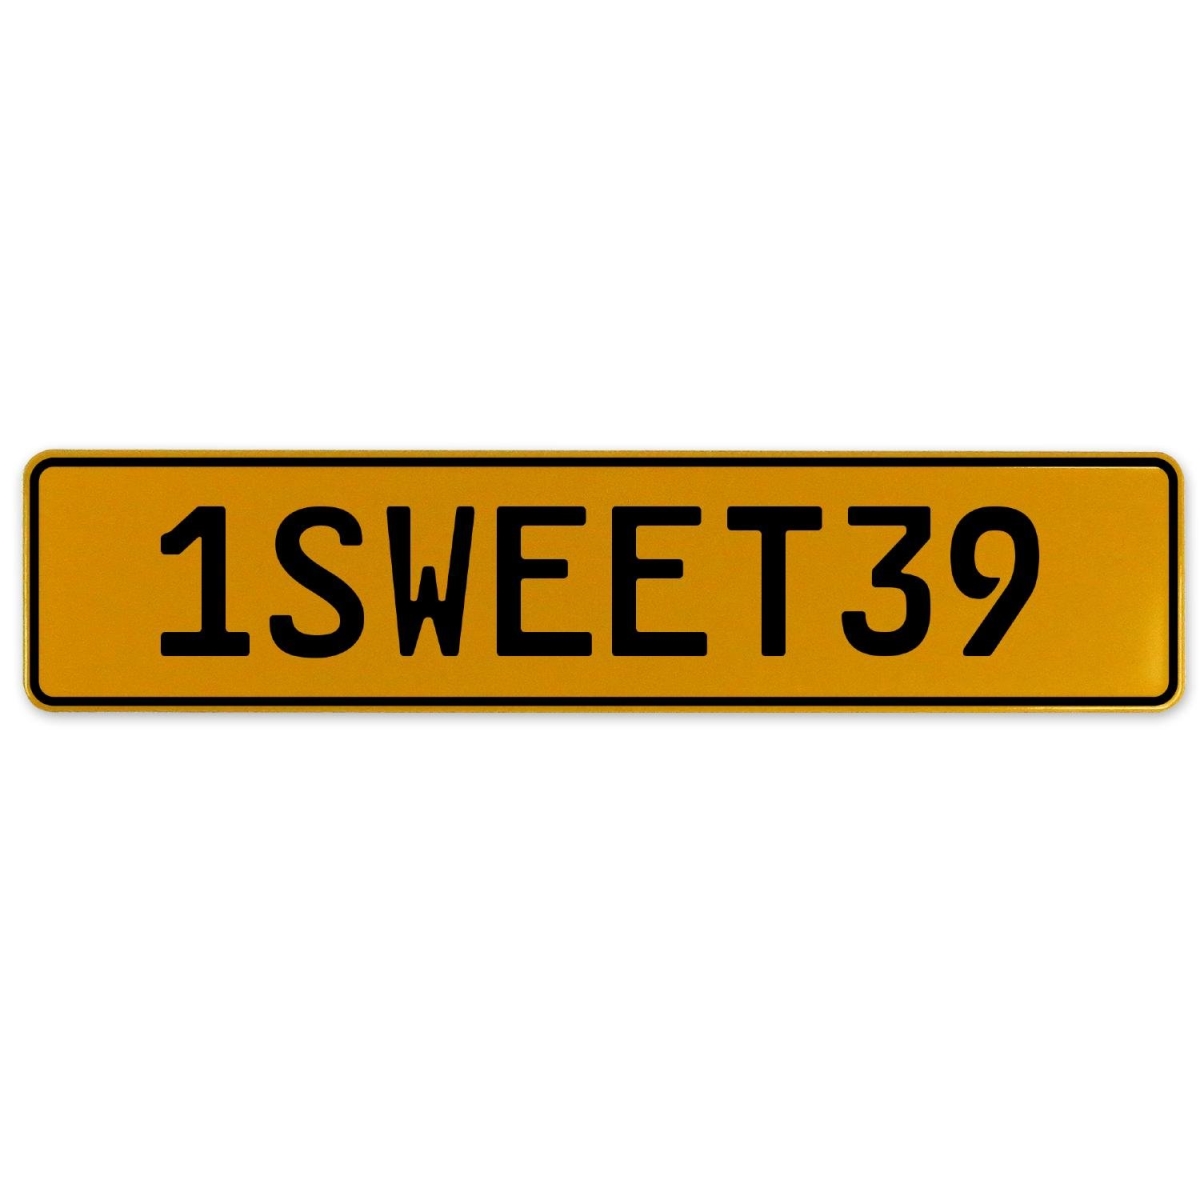 559289 1sweet39 - Yellow Aluminum Street Sign Mancave Euro Plate Name Door Sign Wall